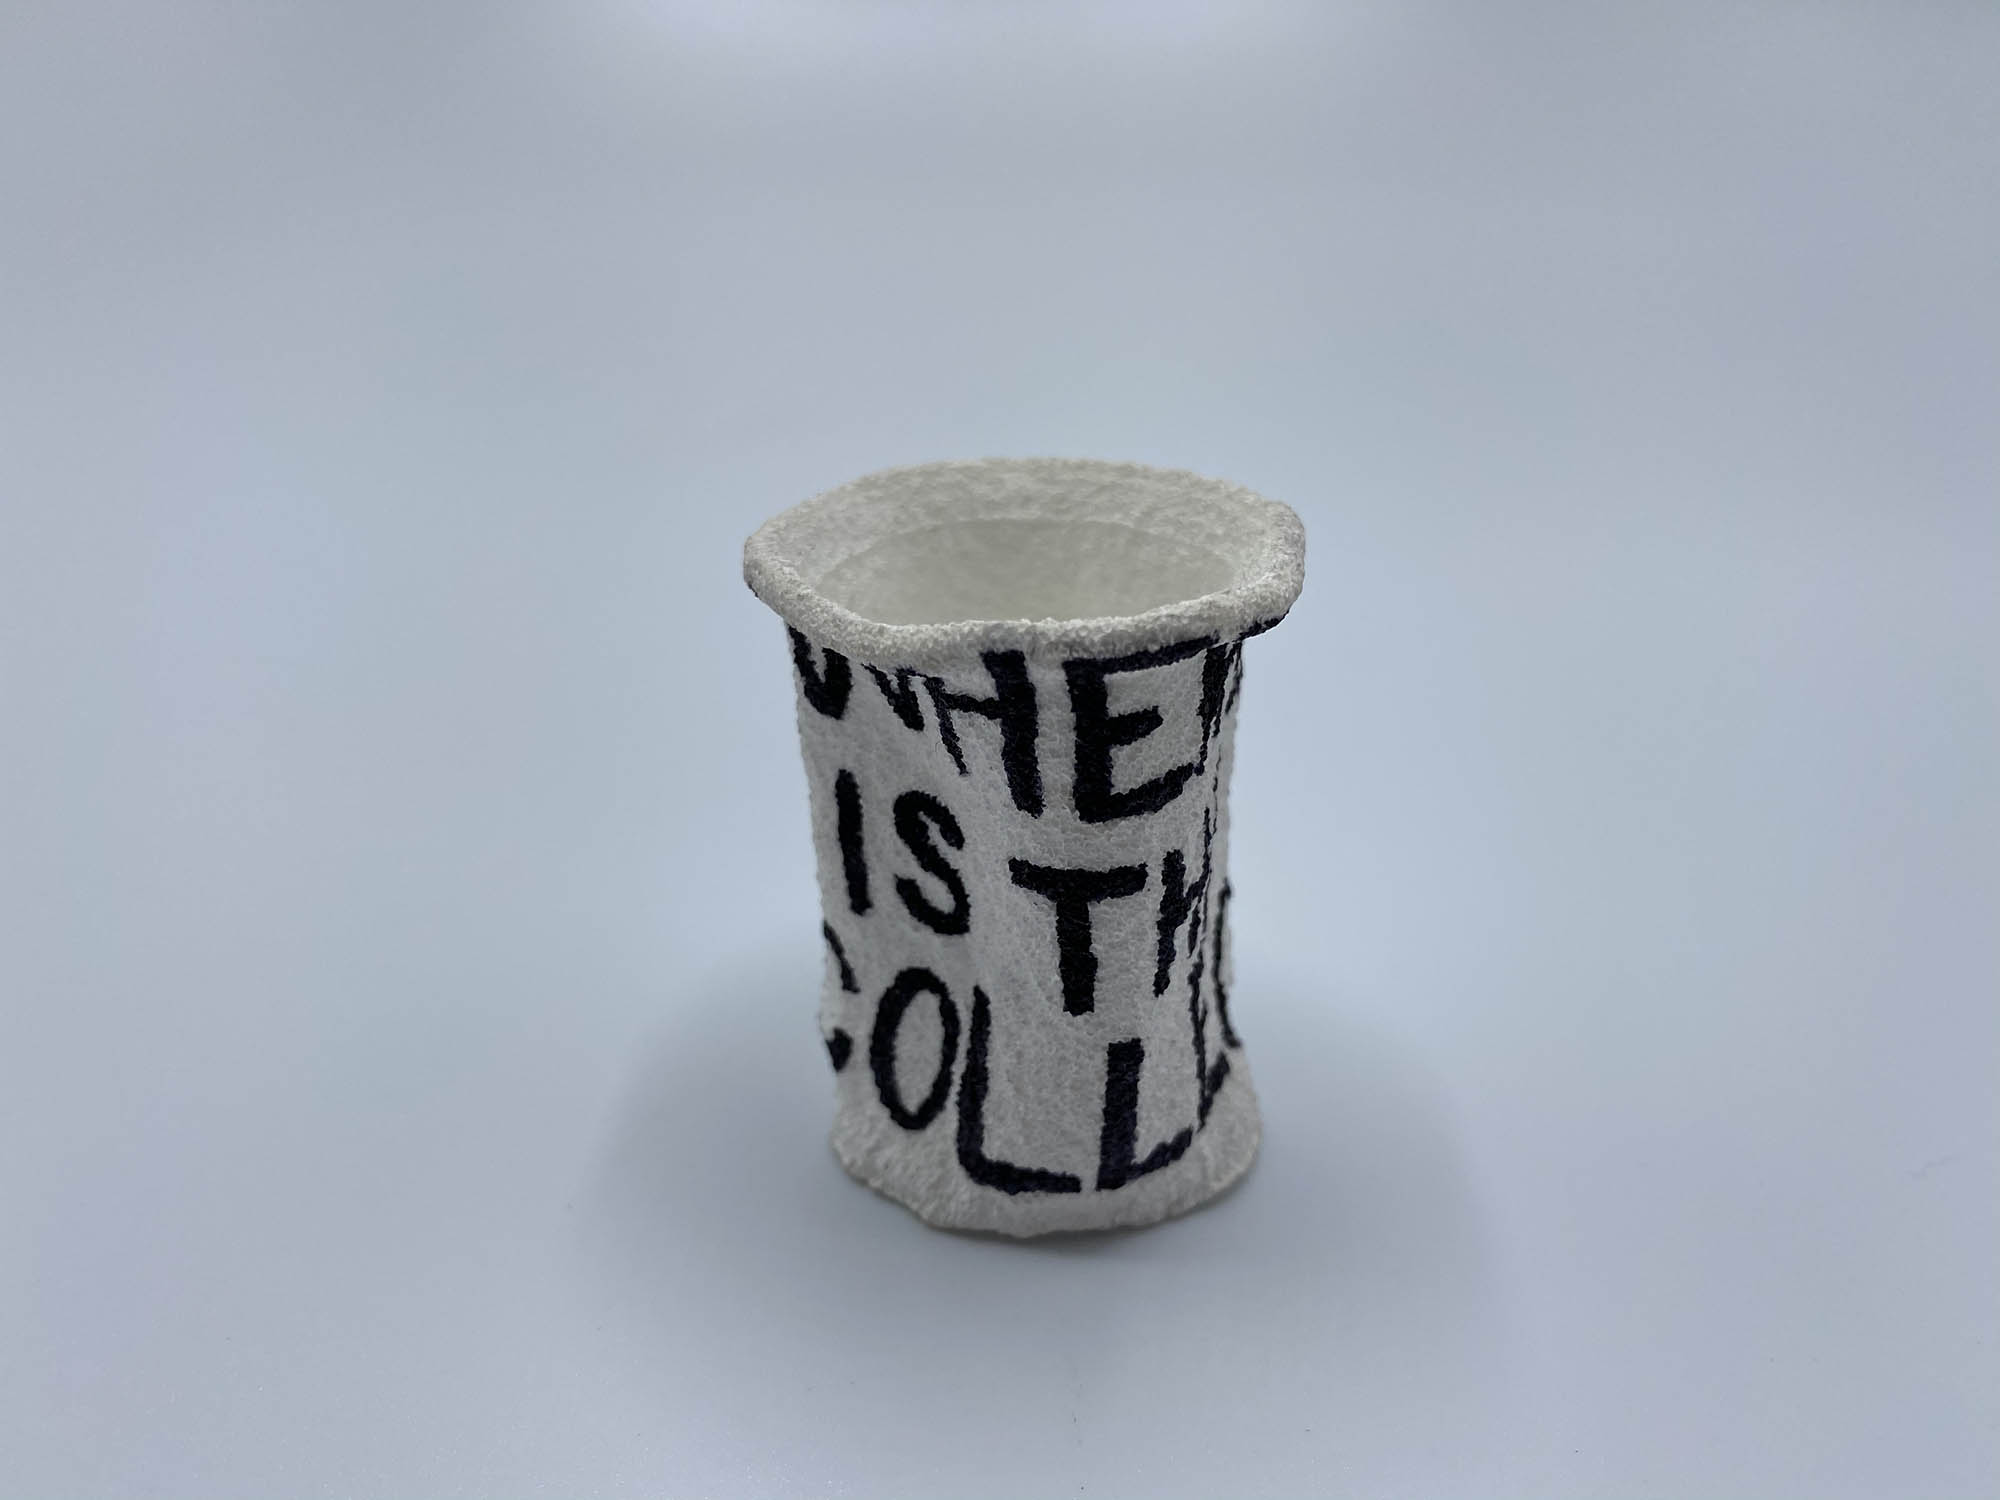 Styrofoam cup taken to the RMS Titanic wreck site - Titanic Museum